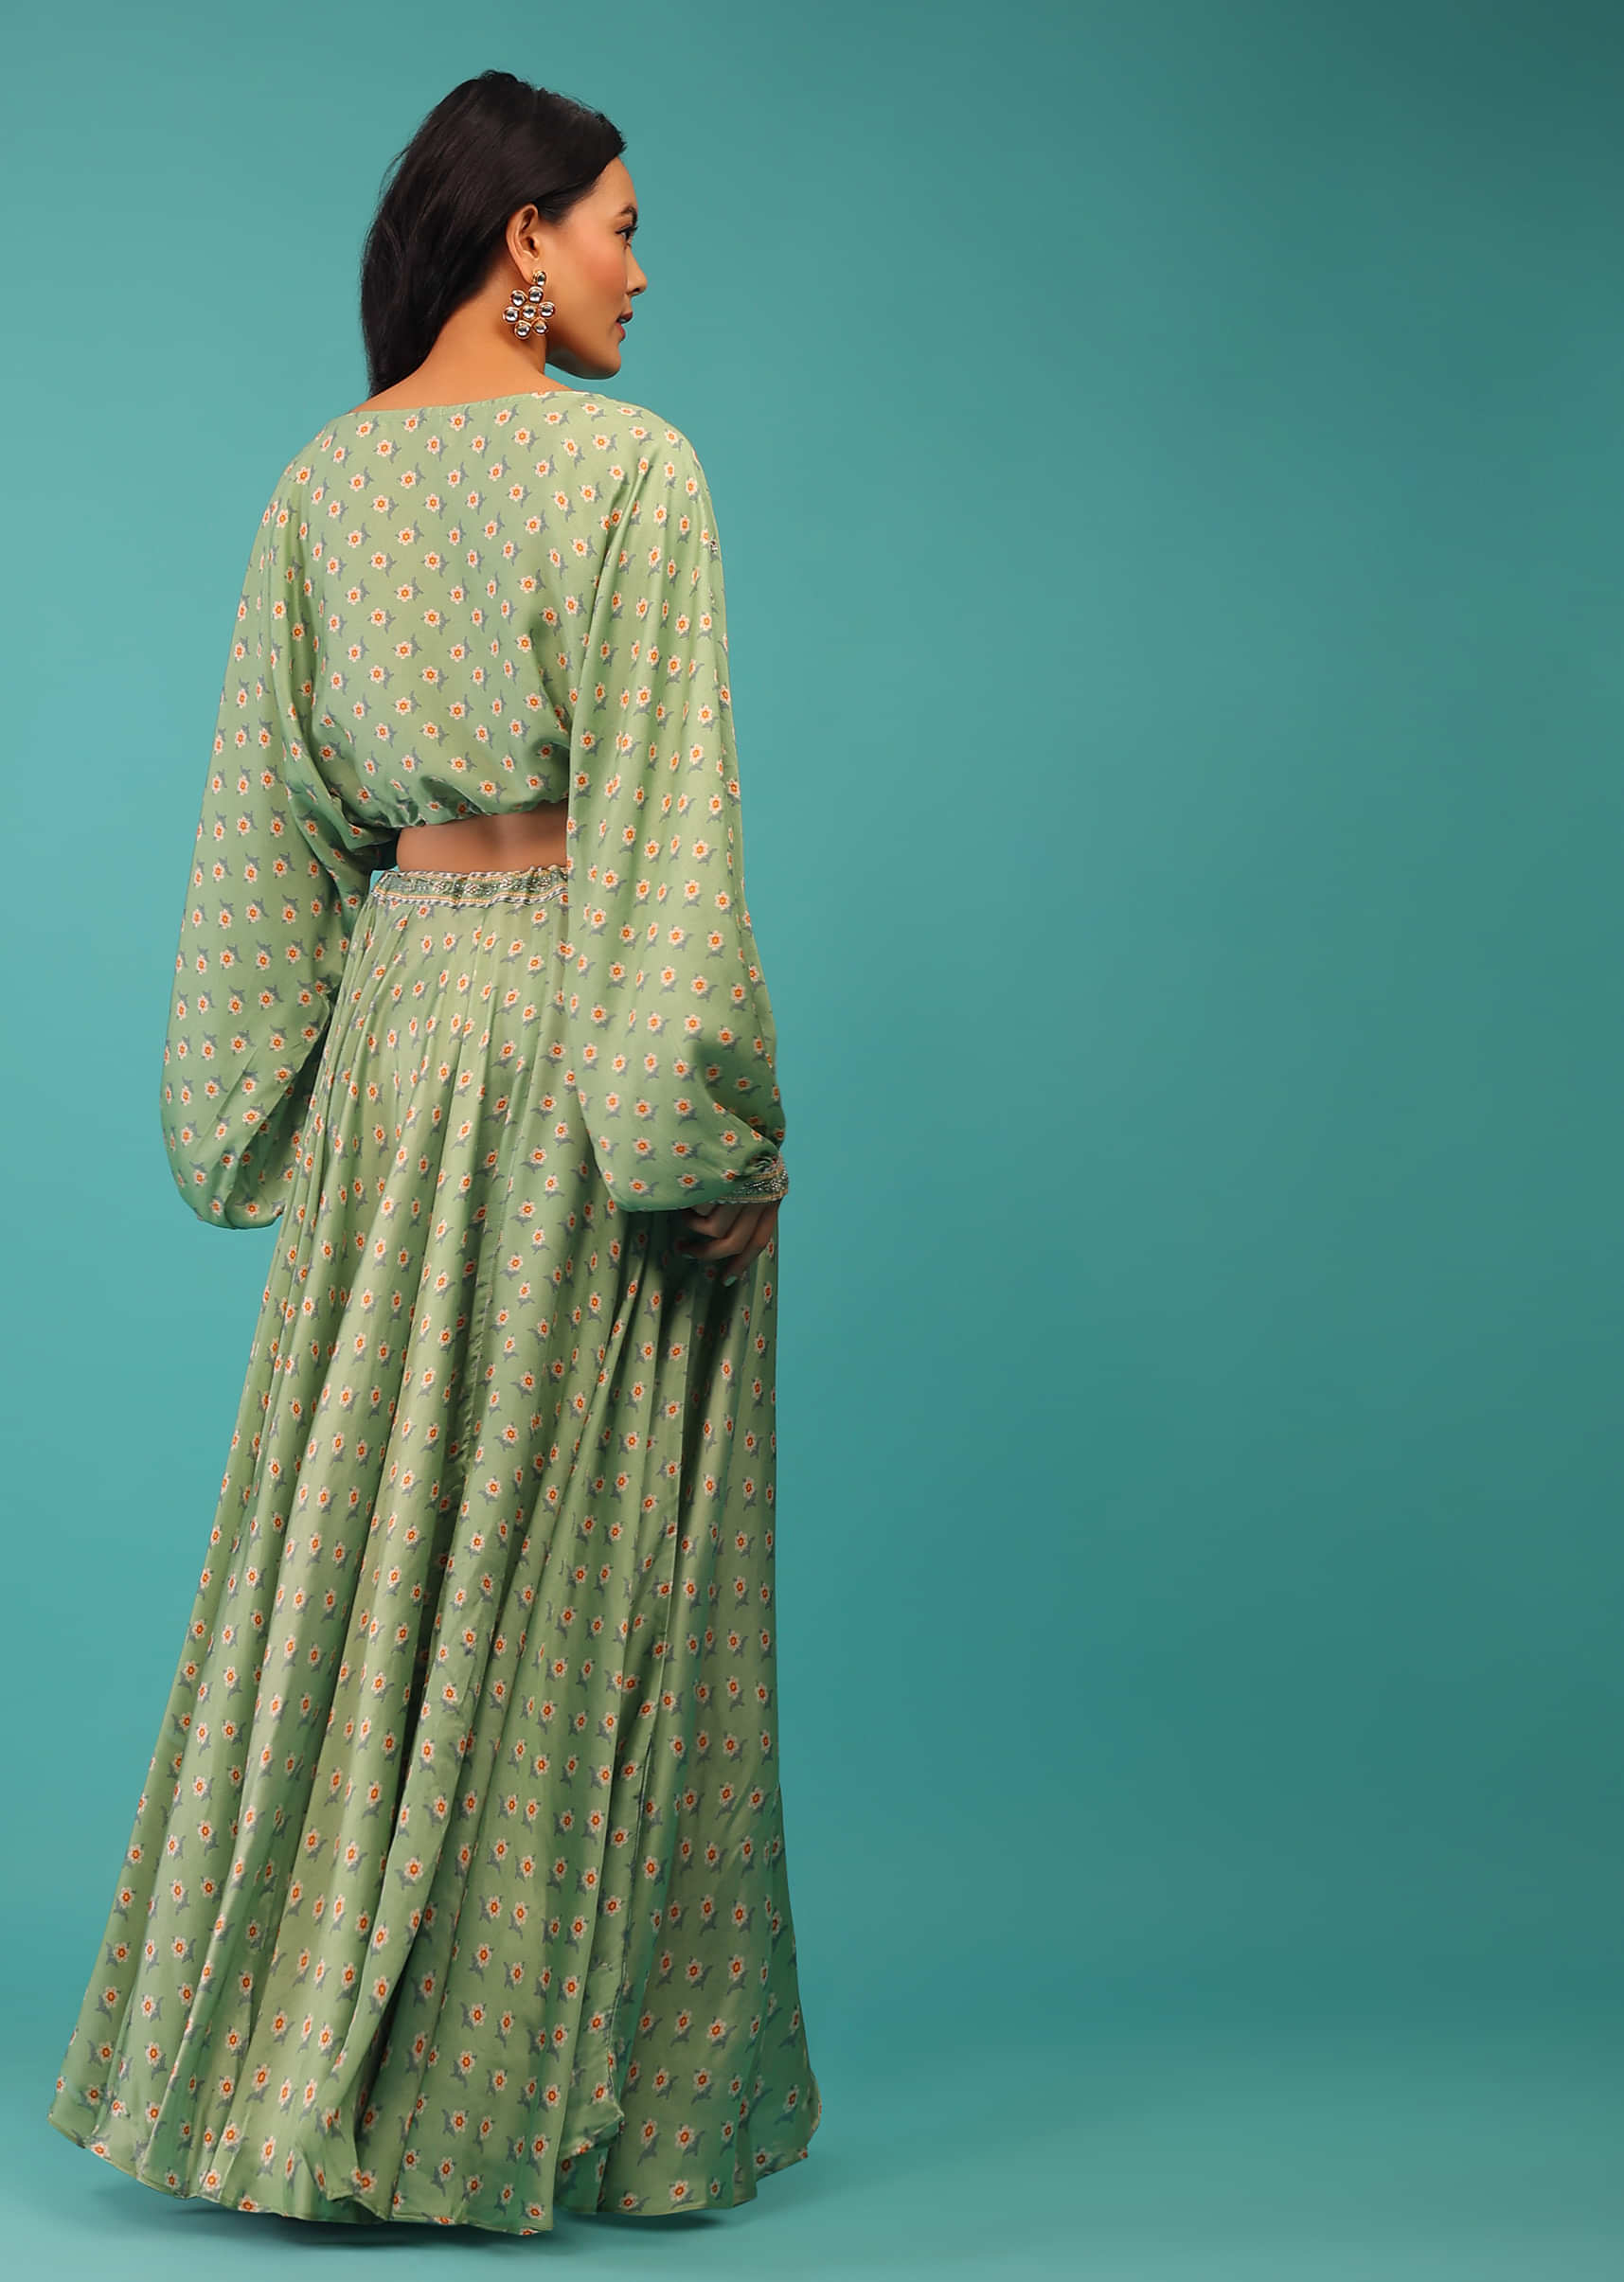 Aspen Green Crop Top With Skirt In Satin Silk